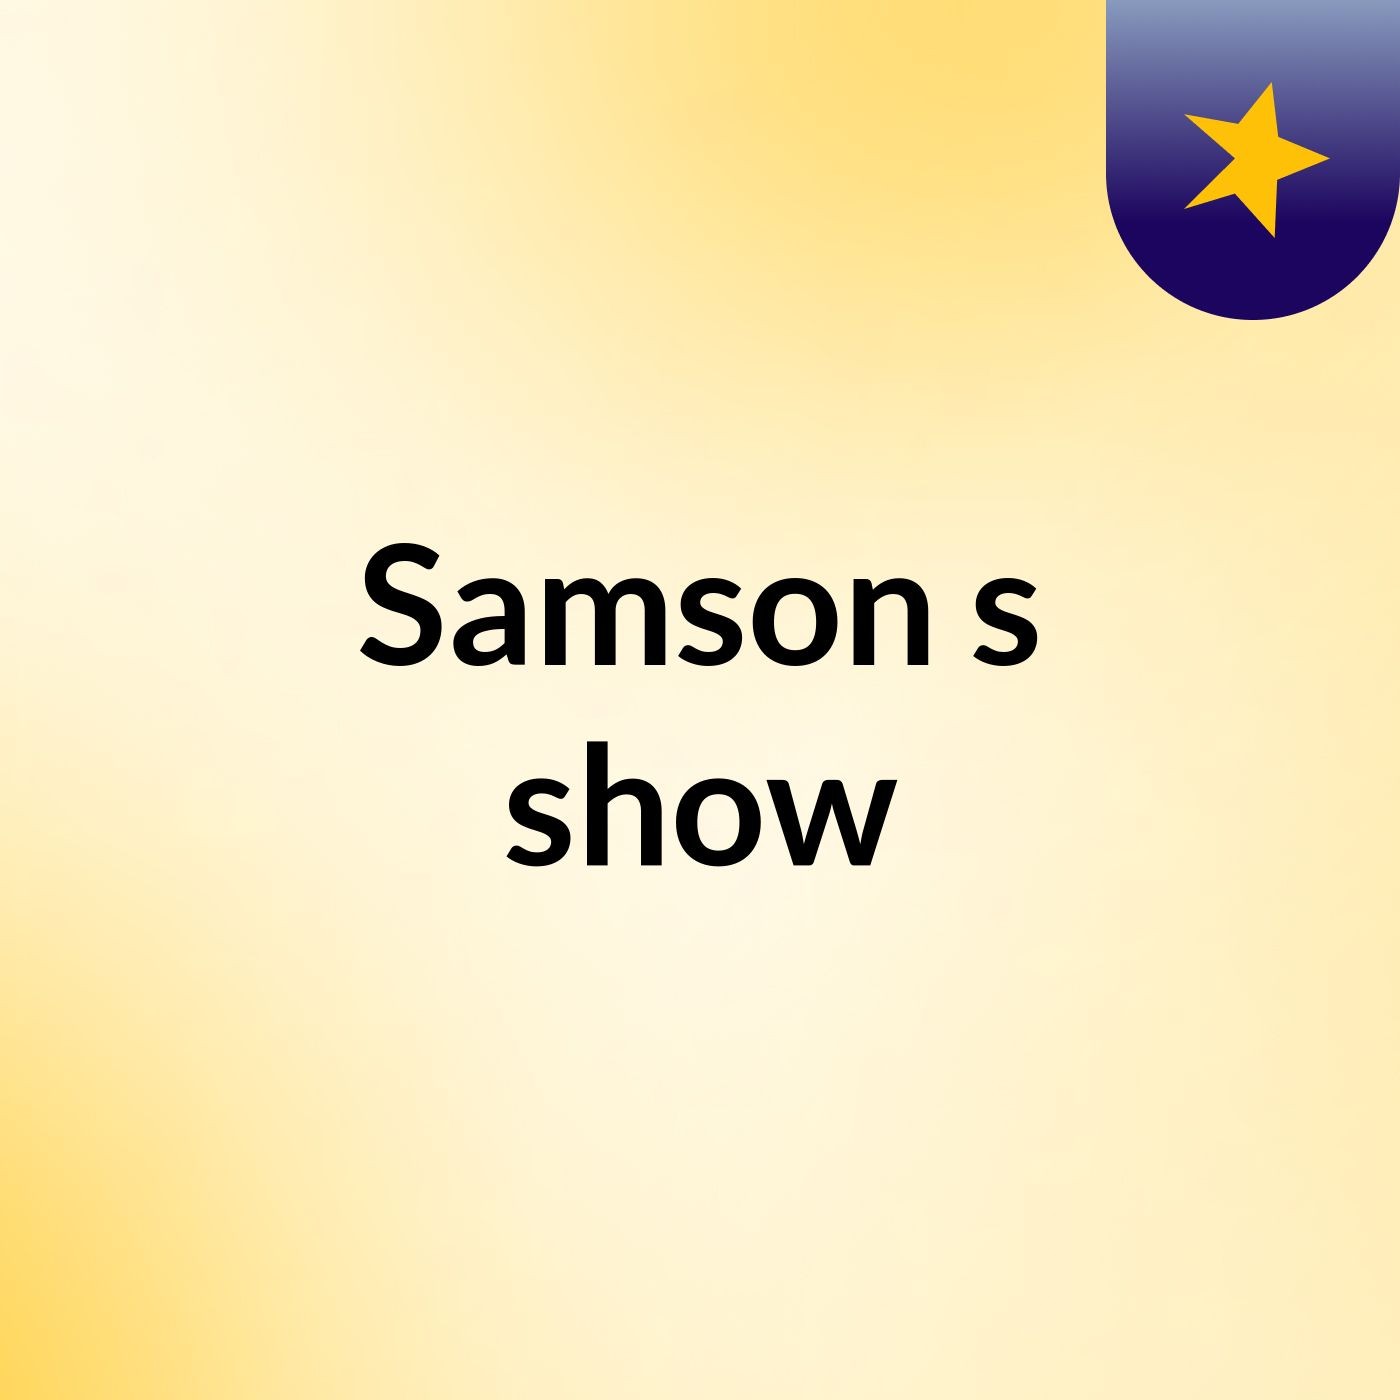 Samson's show